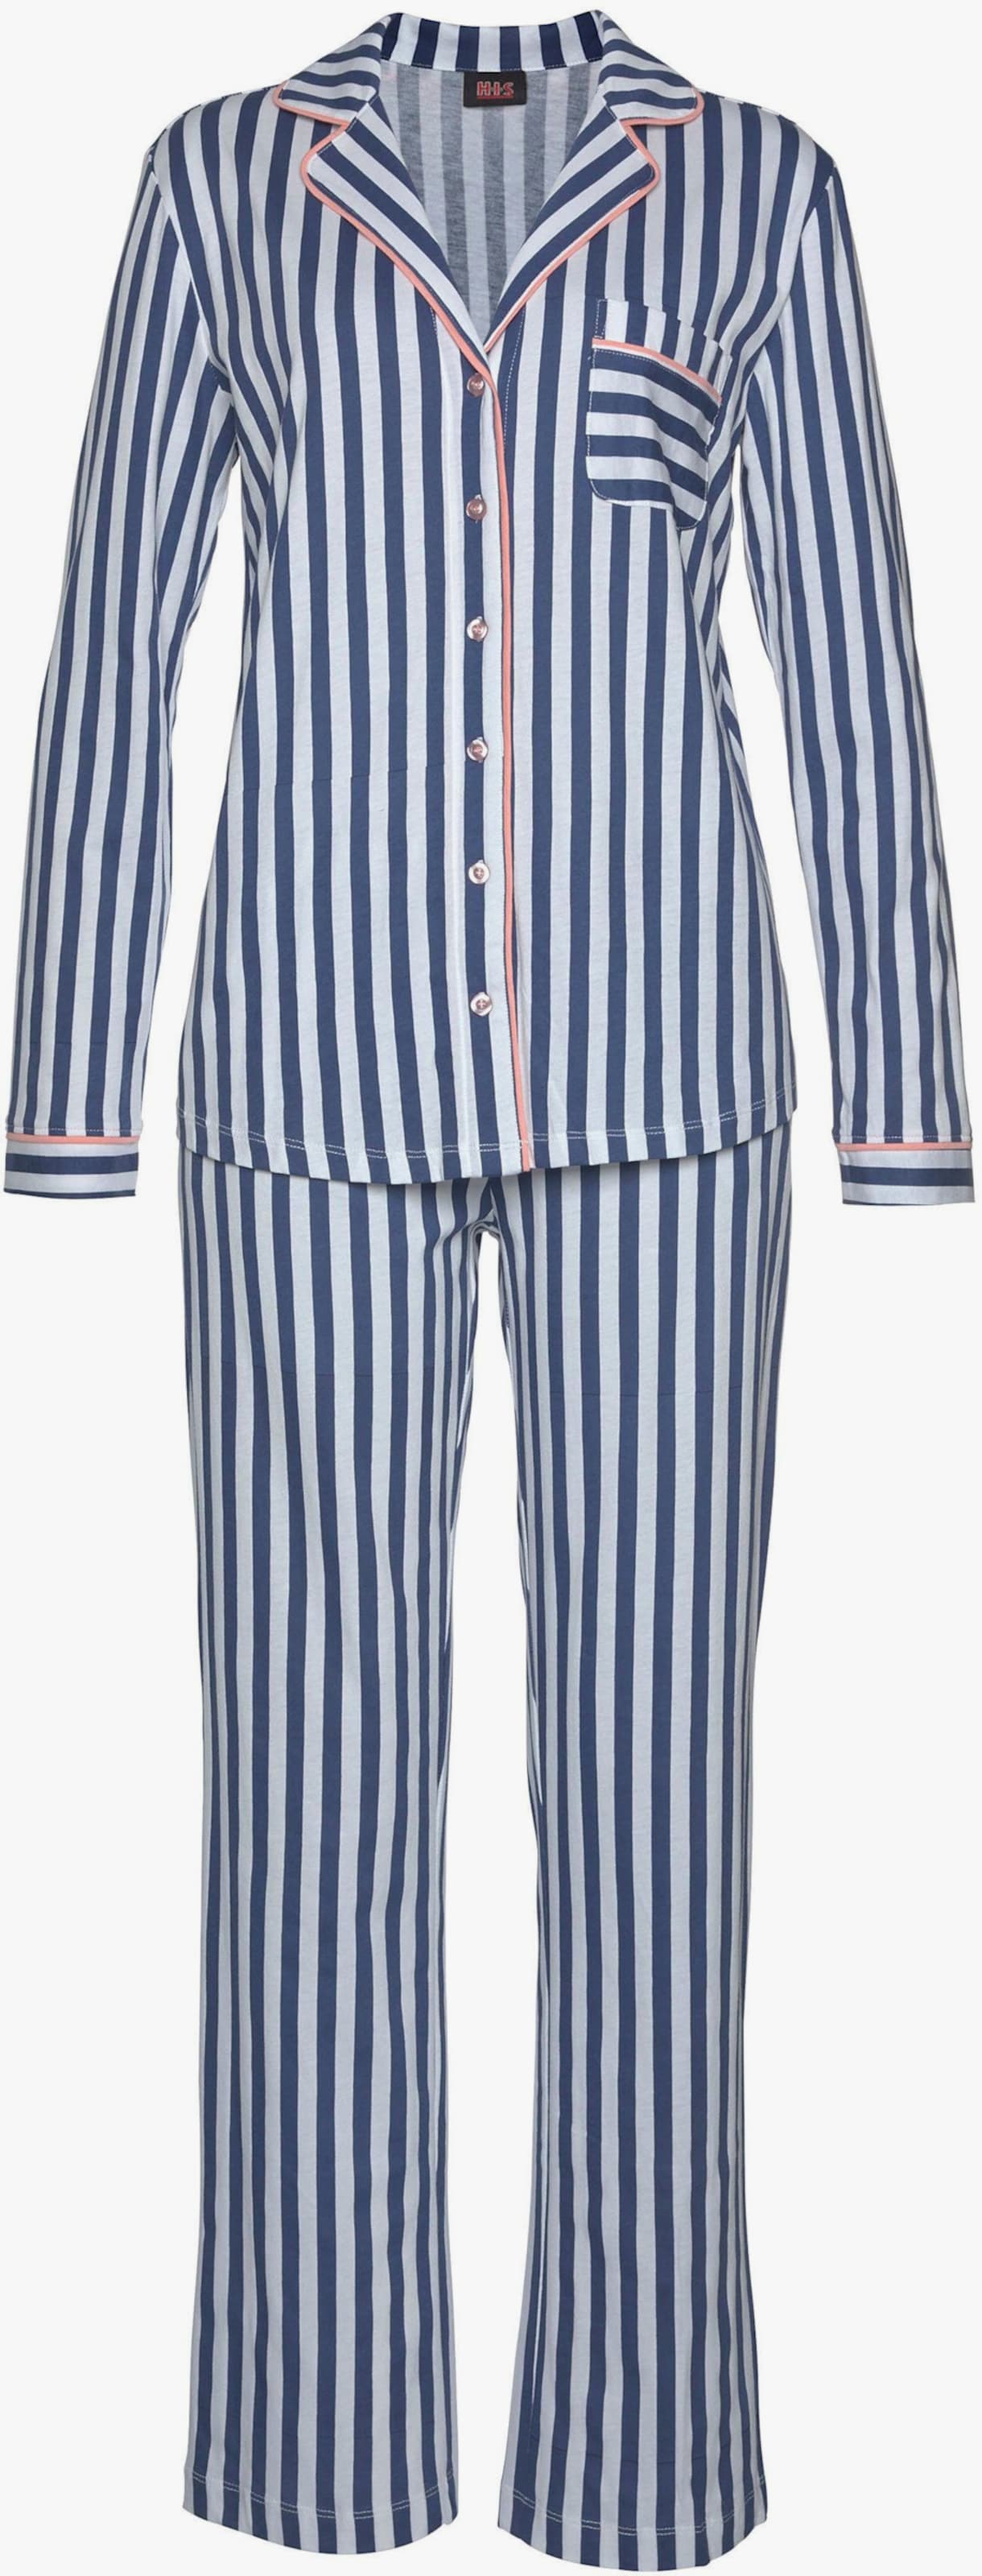 H.I.S Pyjama - dunkelblau-weiss-gestreift